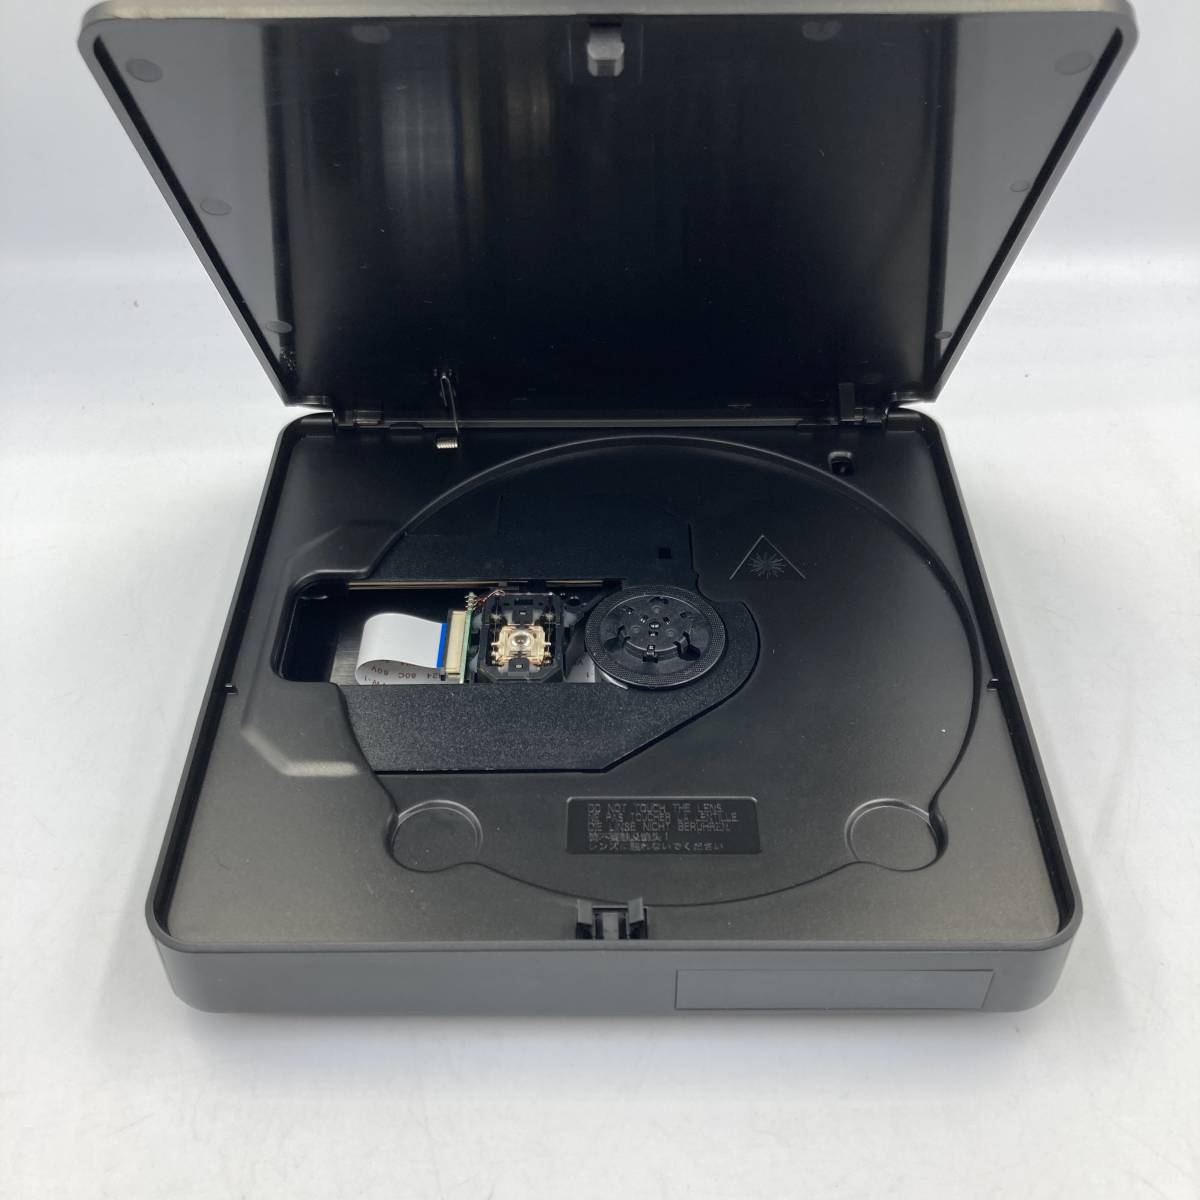 ARAFUNA HDMI Portable Compact DVD/CD Disc Player Model MD1014B 